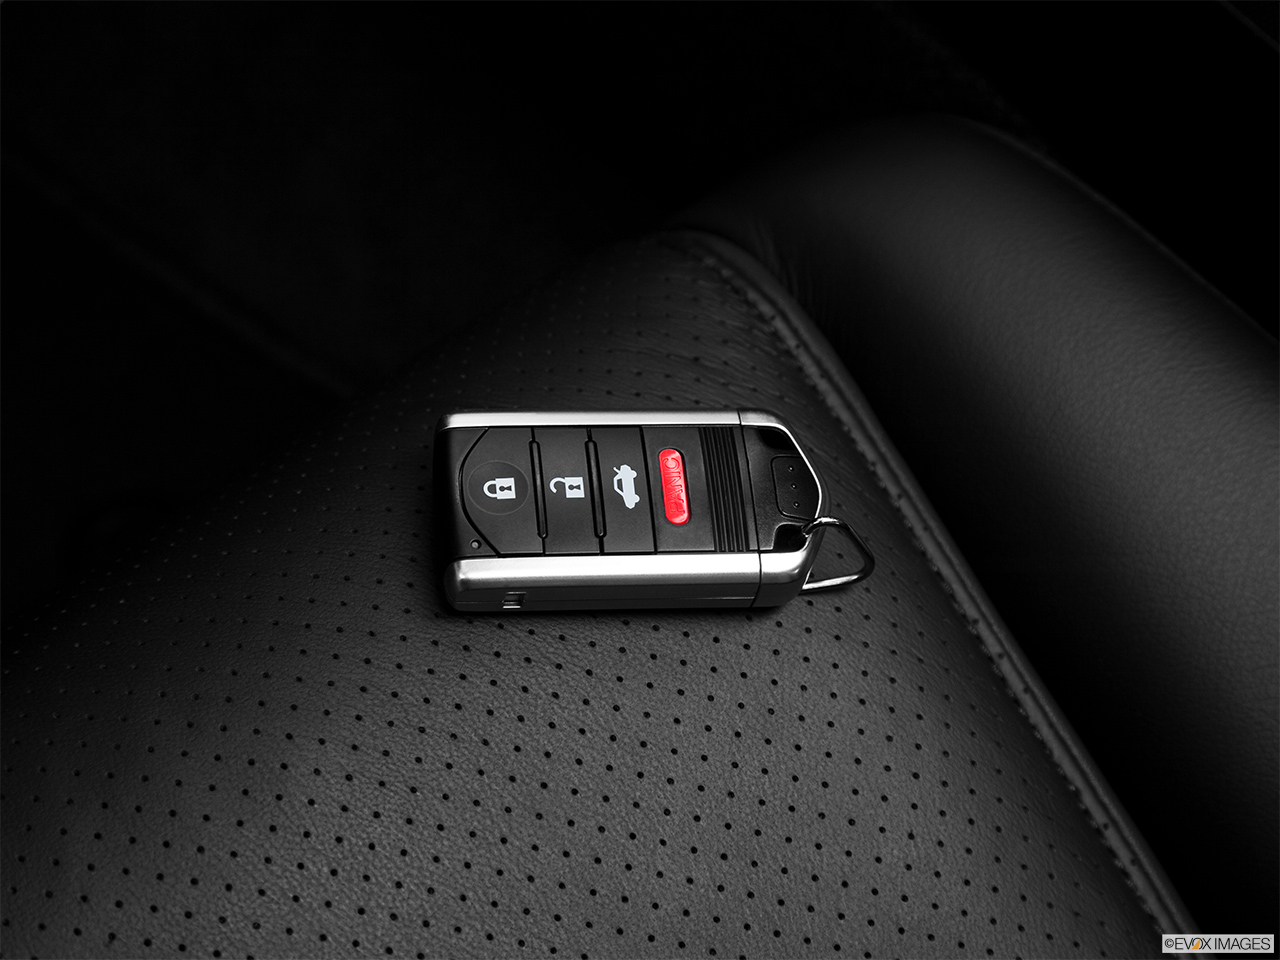 2012 Acura TL TL Key fob on driver's seat. 